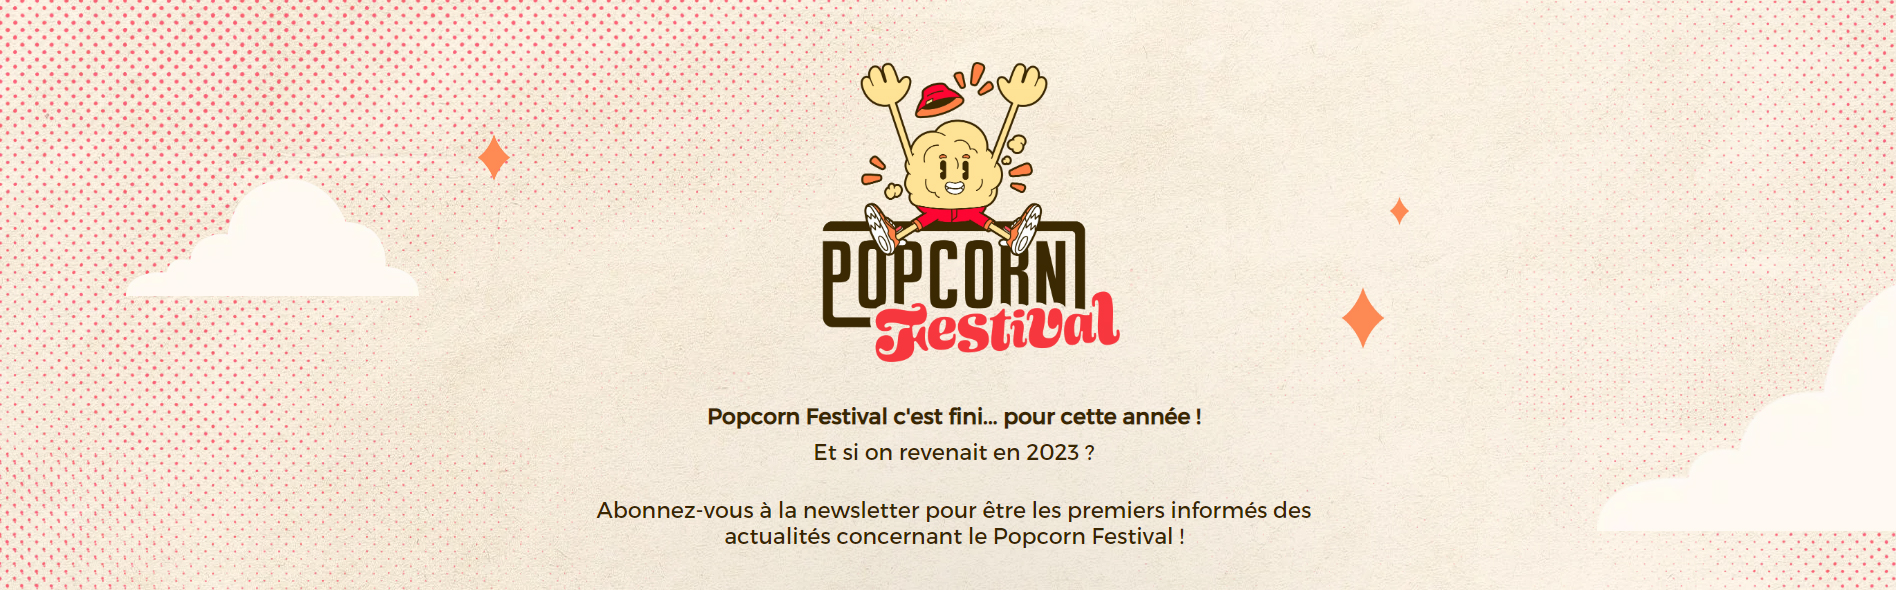 popcorn-festival